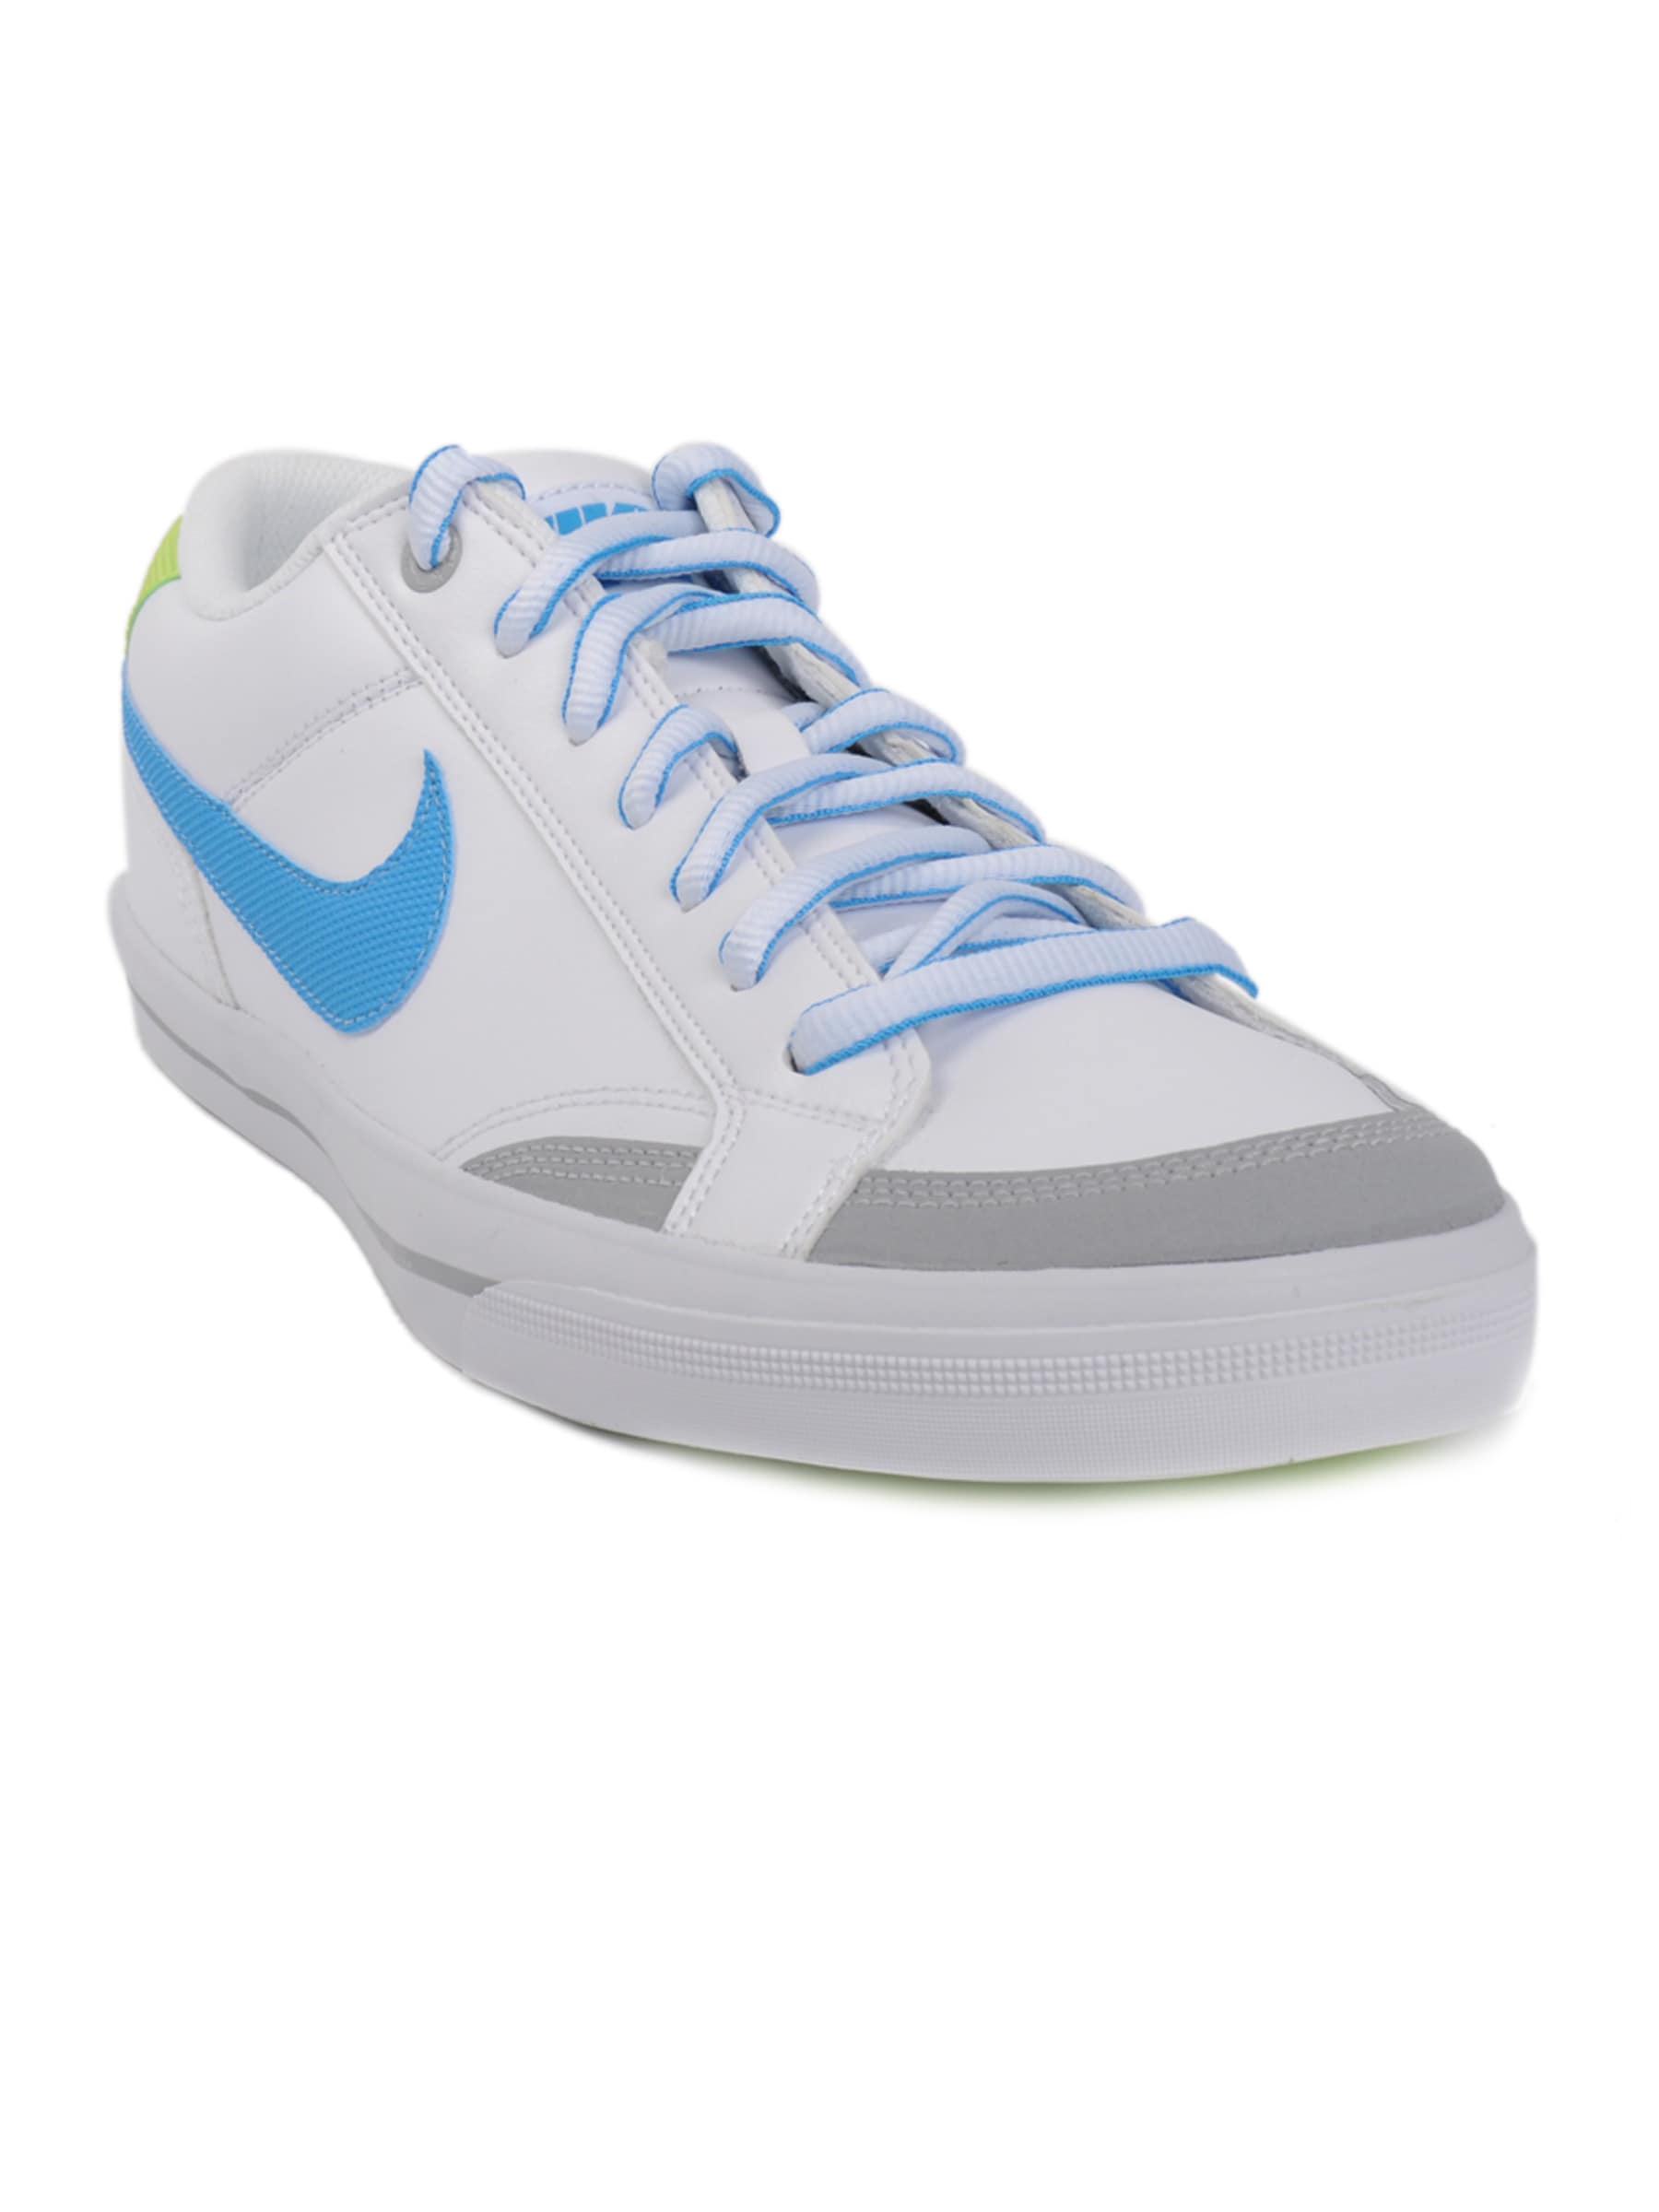 Nike Men CapriII White Sports Shoes